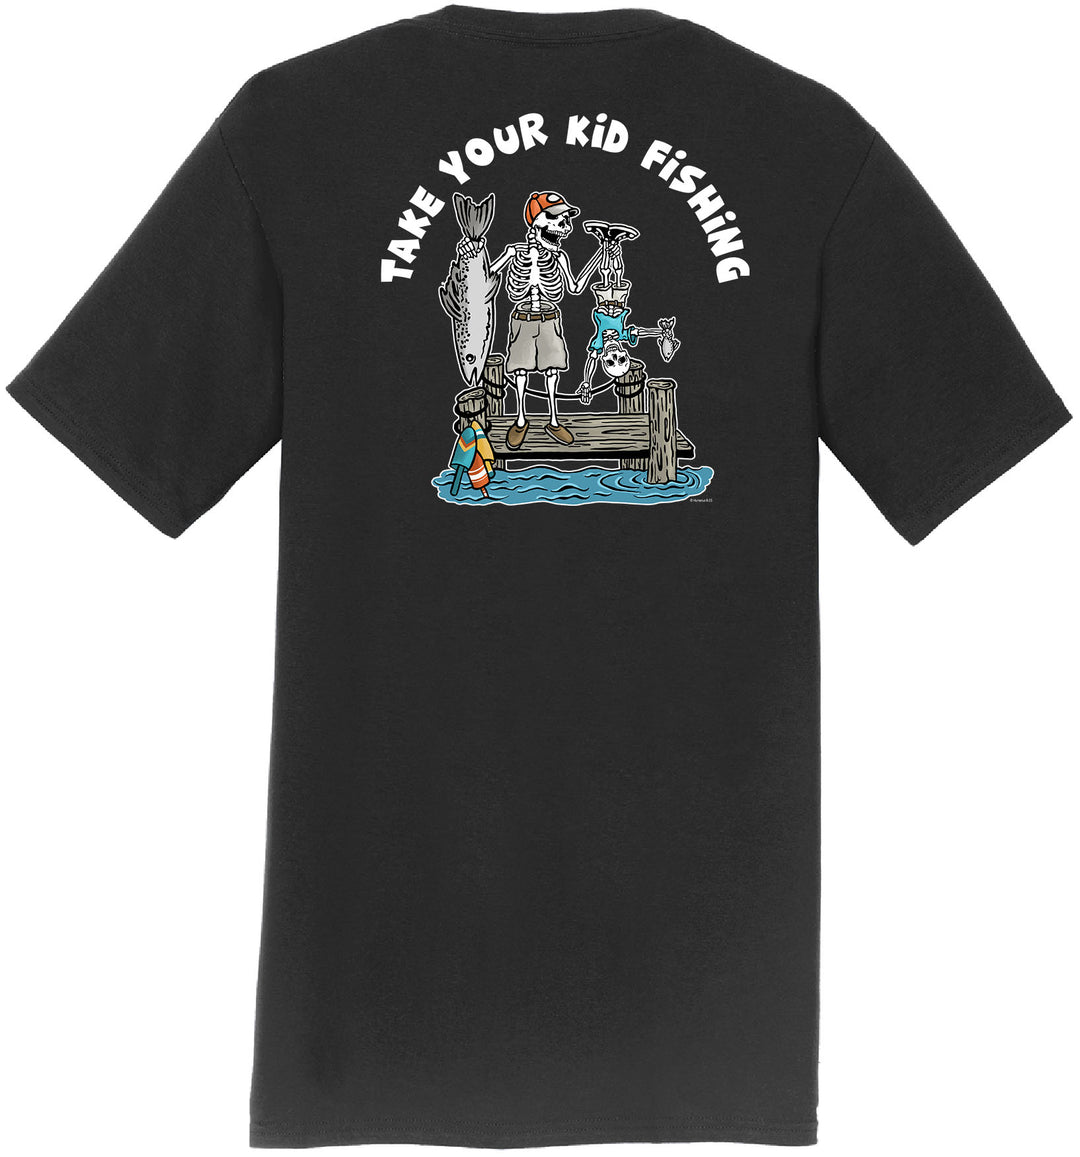 Take Your Kid Fishing - Men's Short Sleeve T-Shirt Large / Black / Ring Spun Cotton 4.5 Ounce